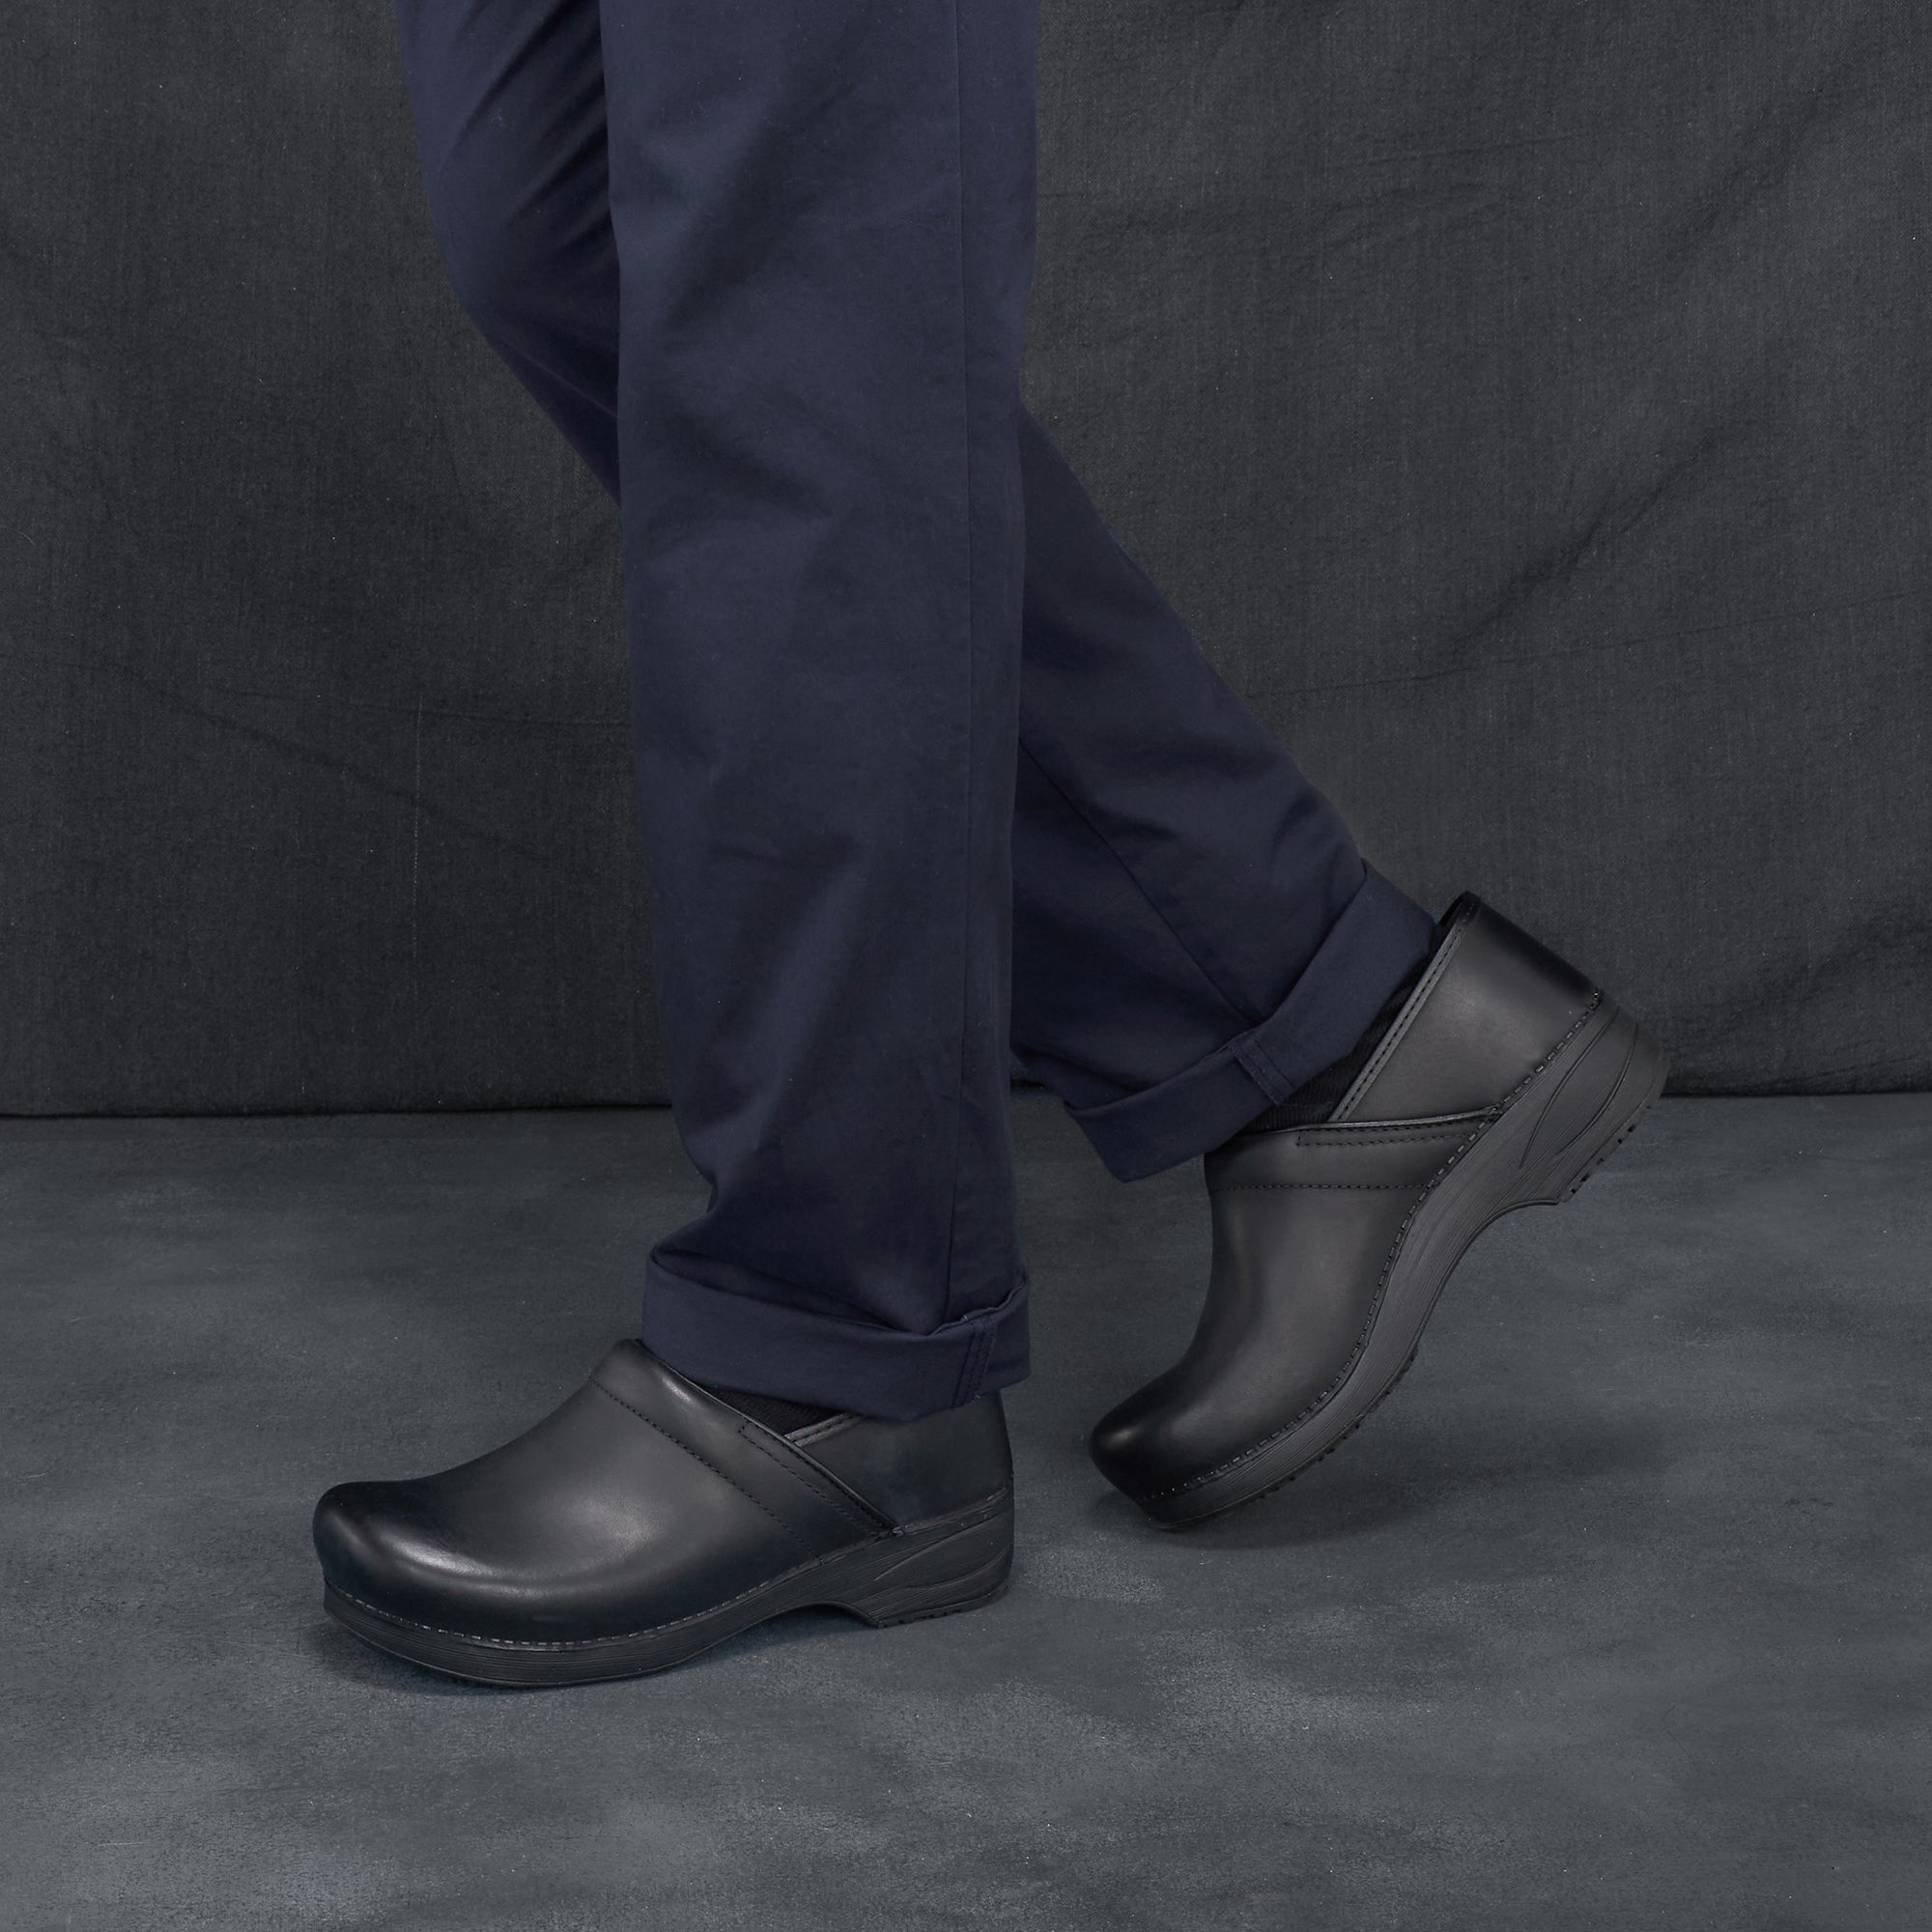 Black men&#39;s clogs worn in a casual setting.